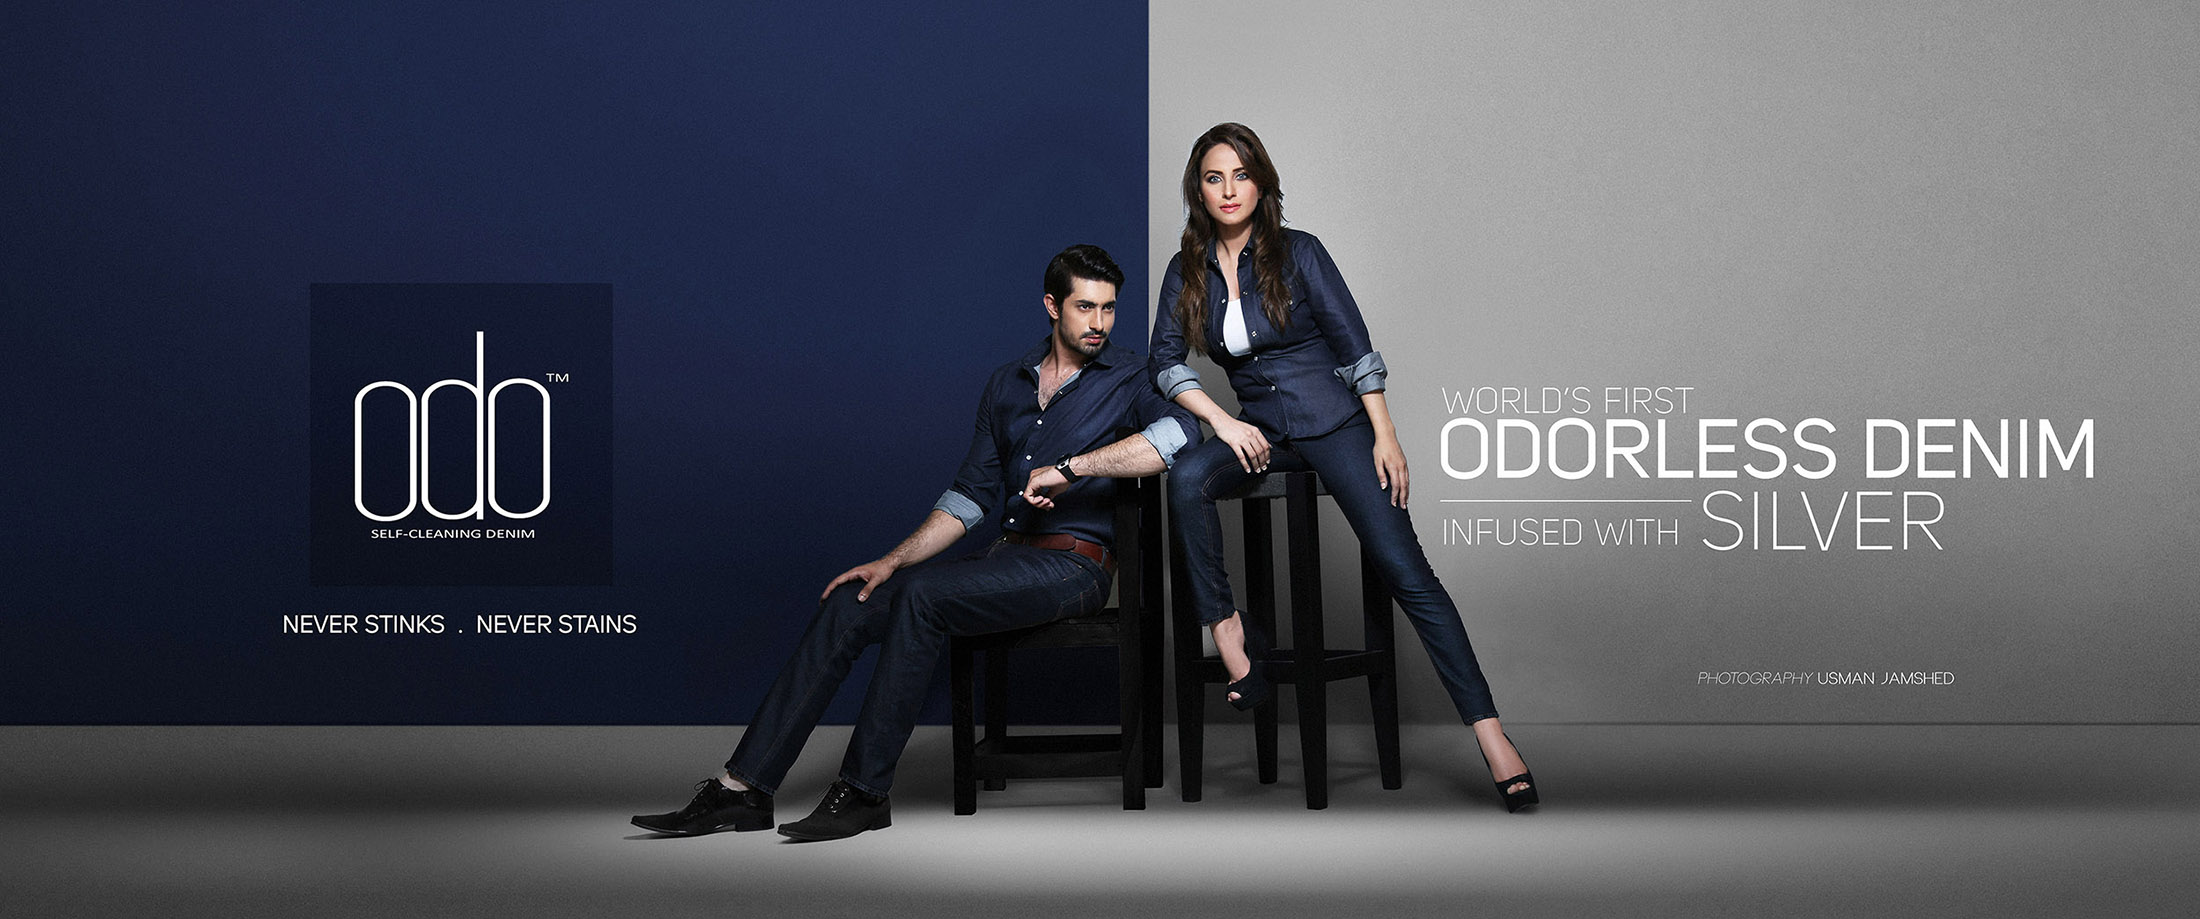 Odo Denim - Self Cleaning Jeans - Usman Jamshed Studio